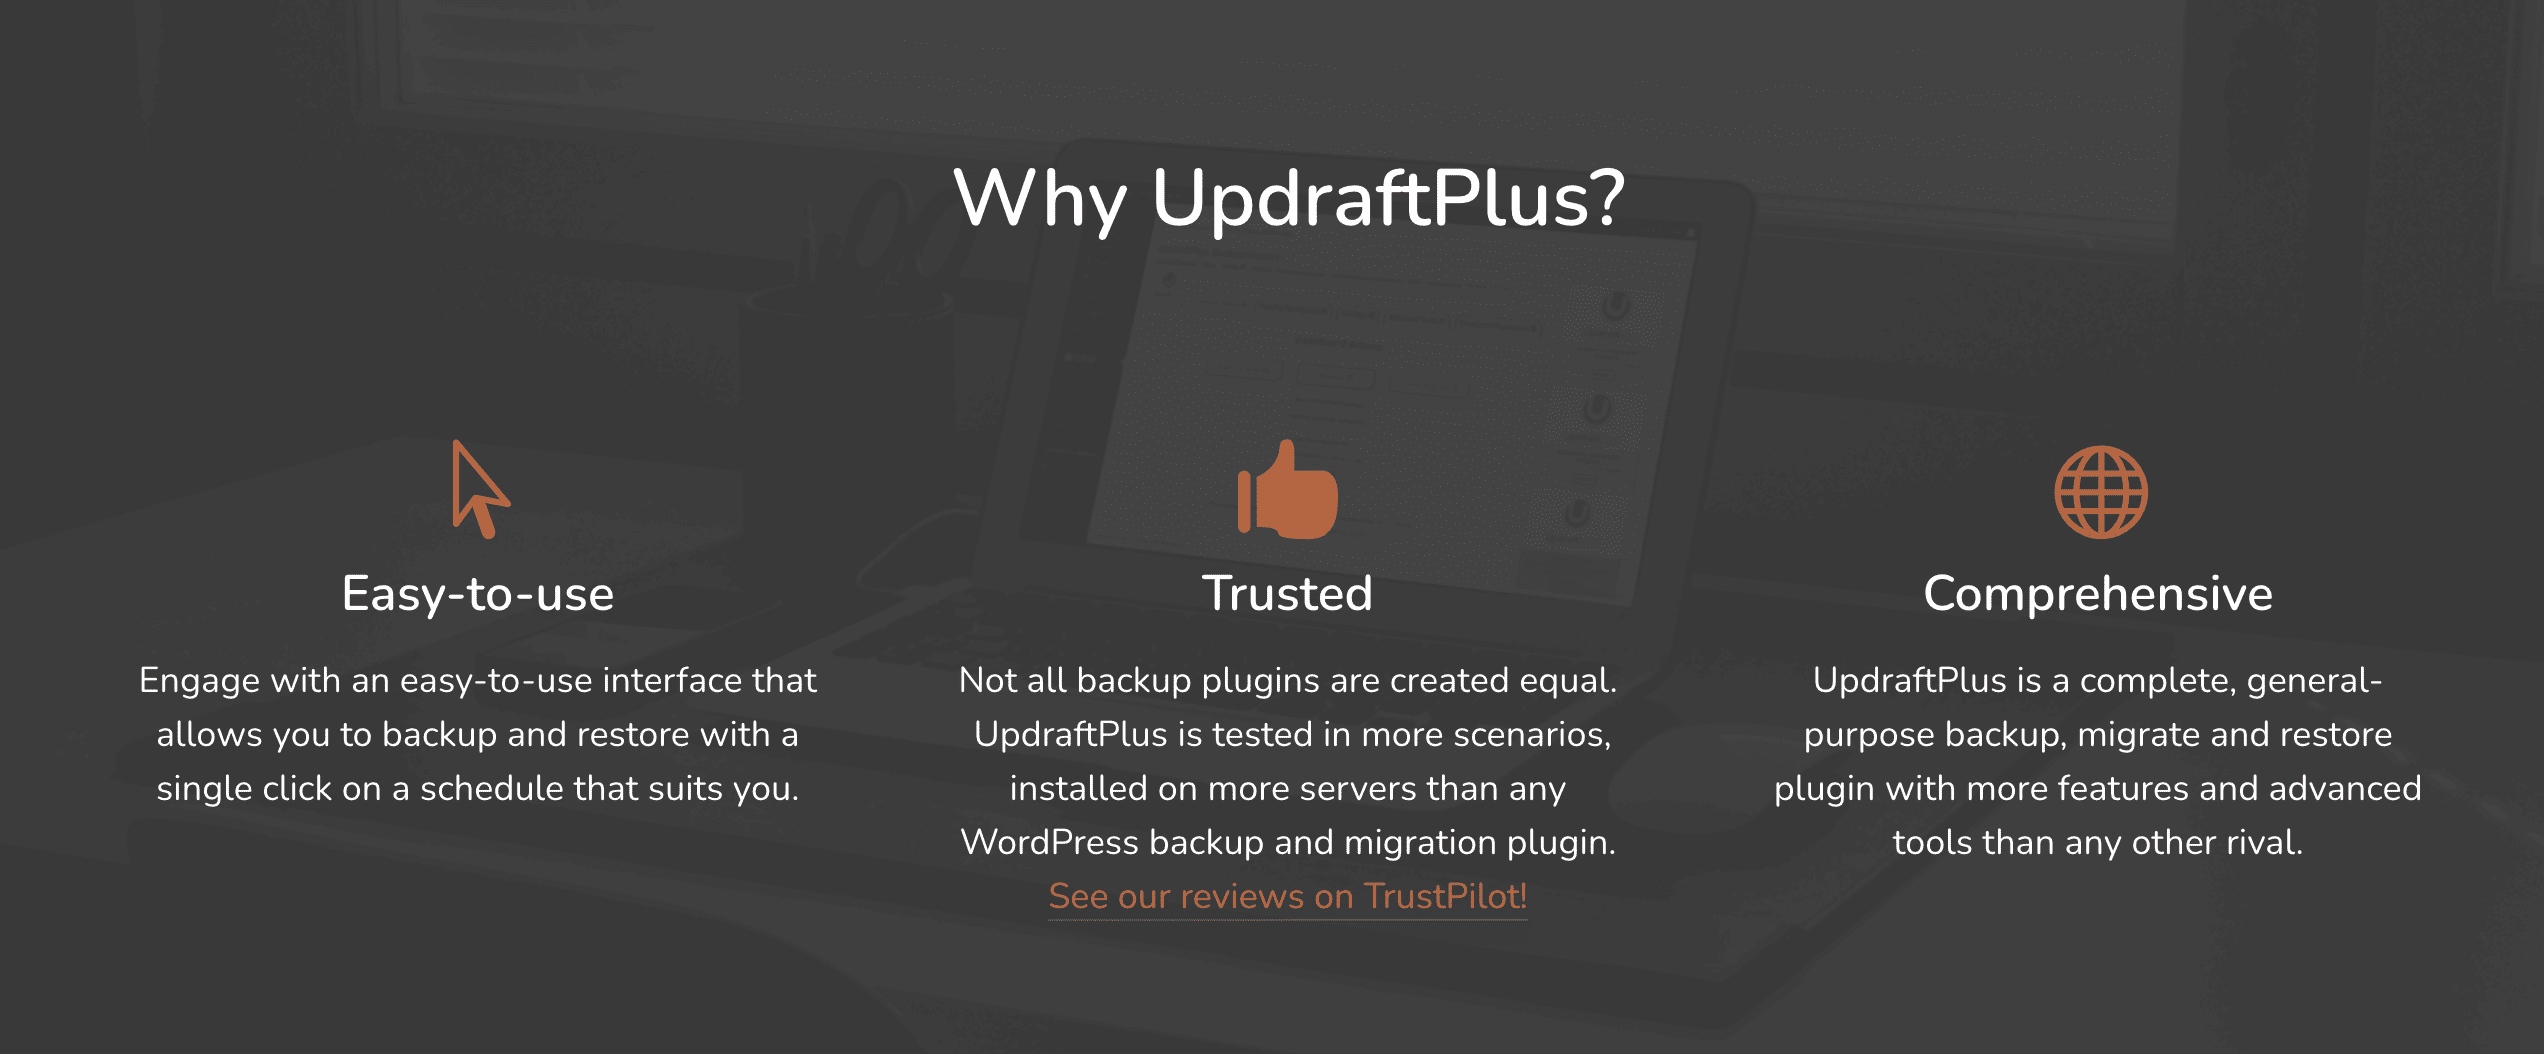 UpdraftPlus Features